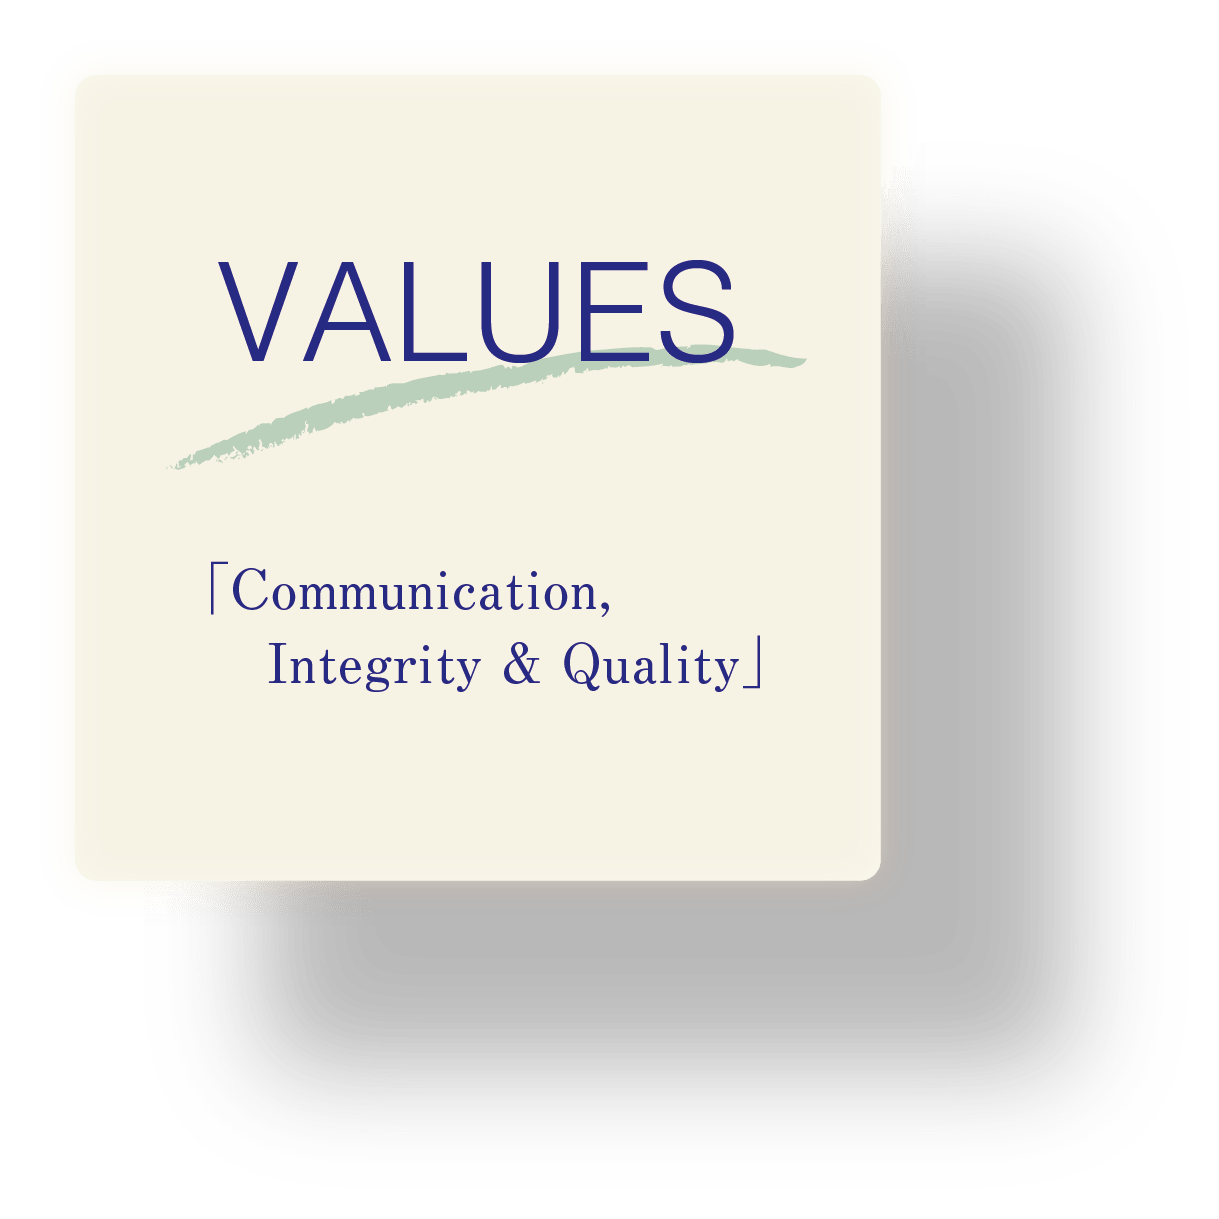 VALUES 「Communication, Integrity & Quality」